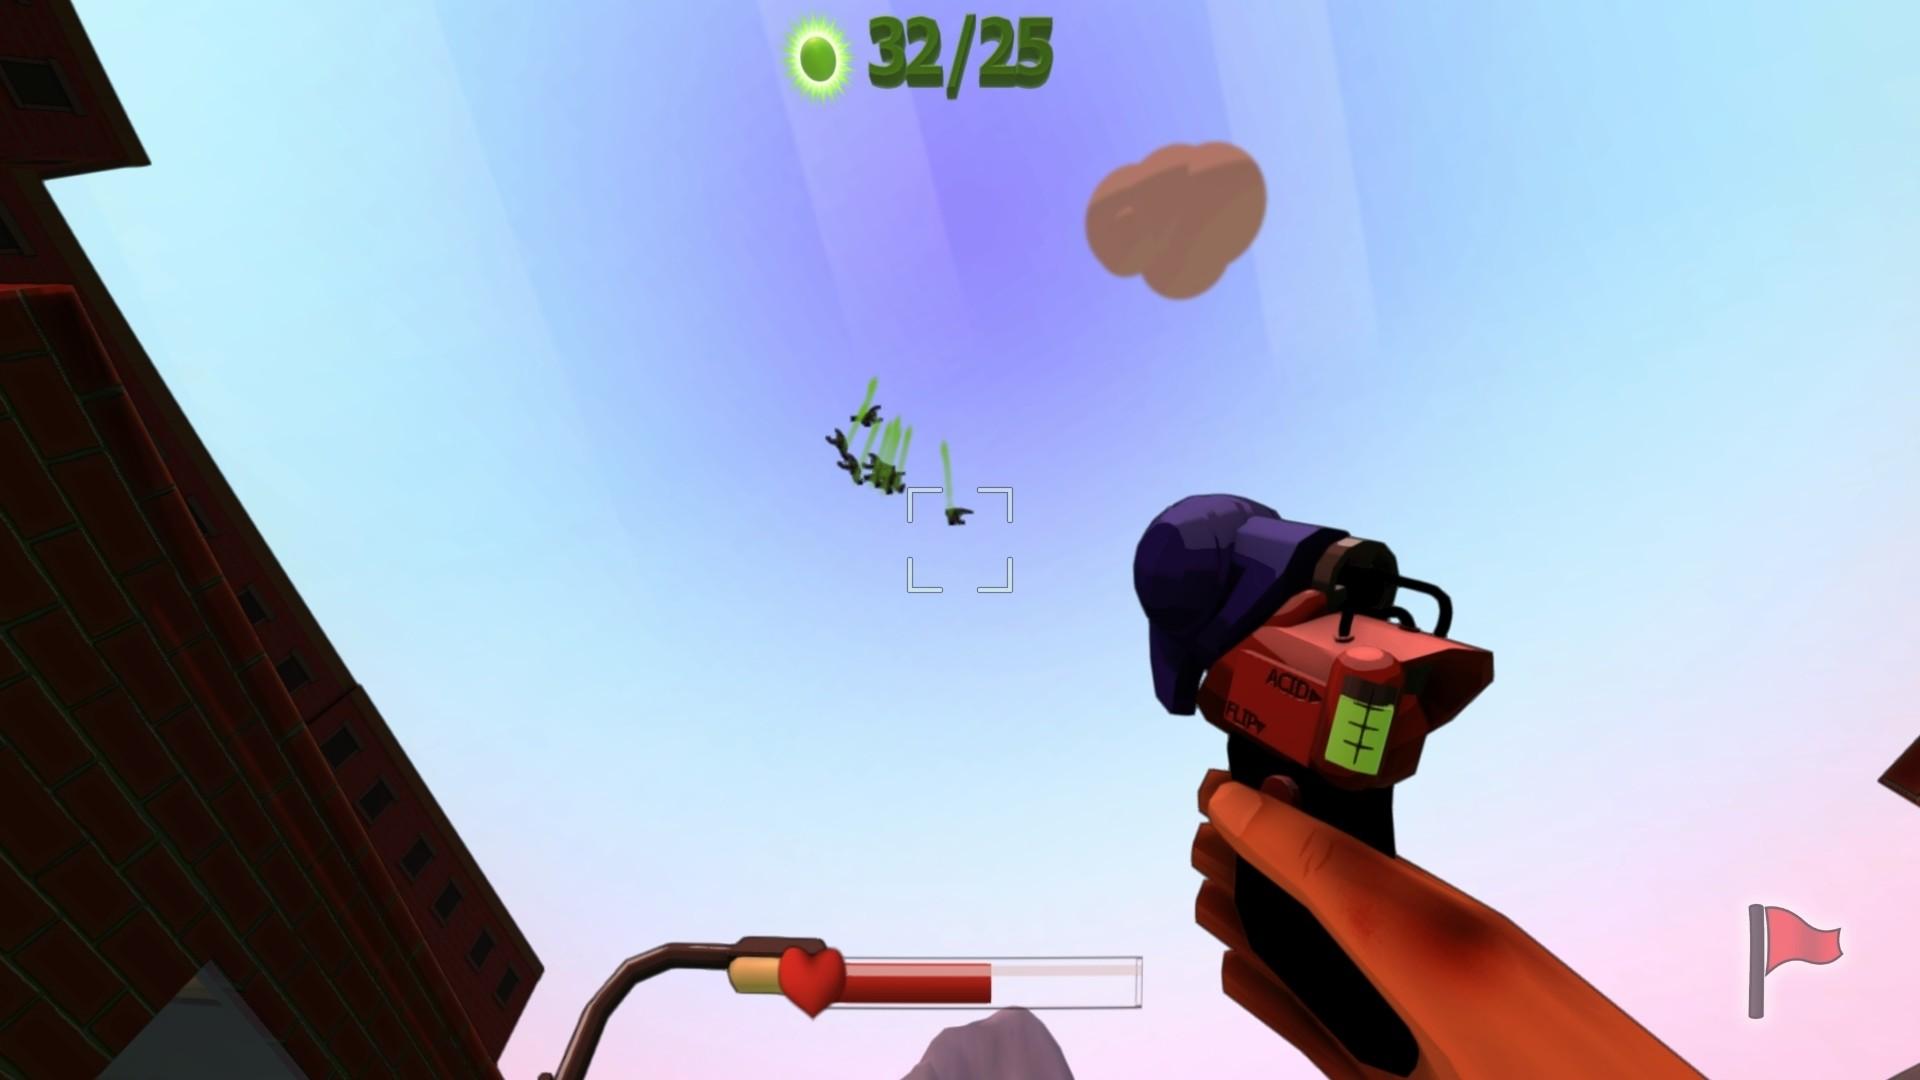 Screenshot №1 from game Acid Flip